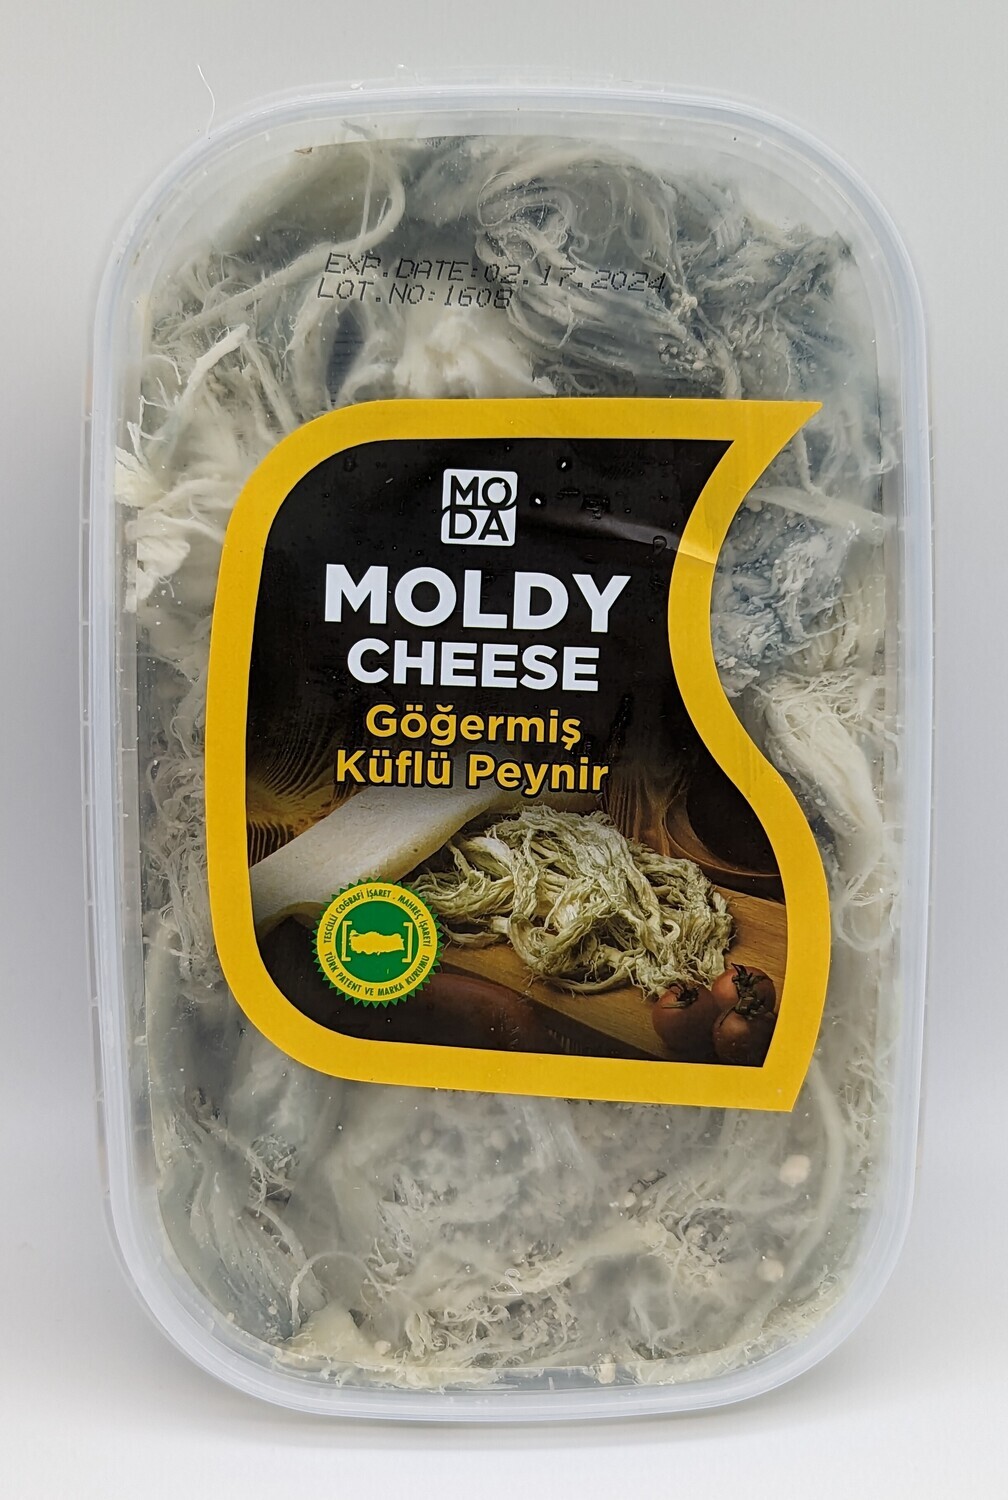 MODA Moldy Cheese - Gogermis Kuflu Peynir 450g